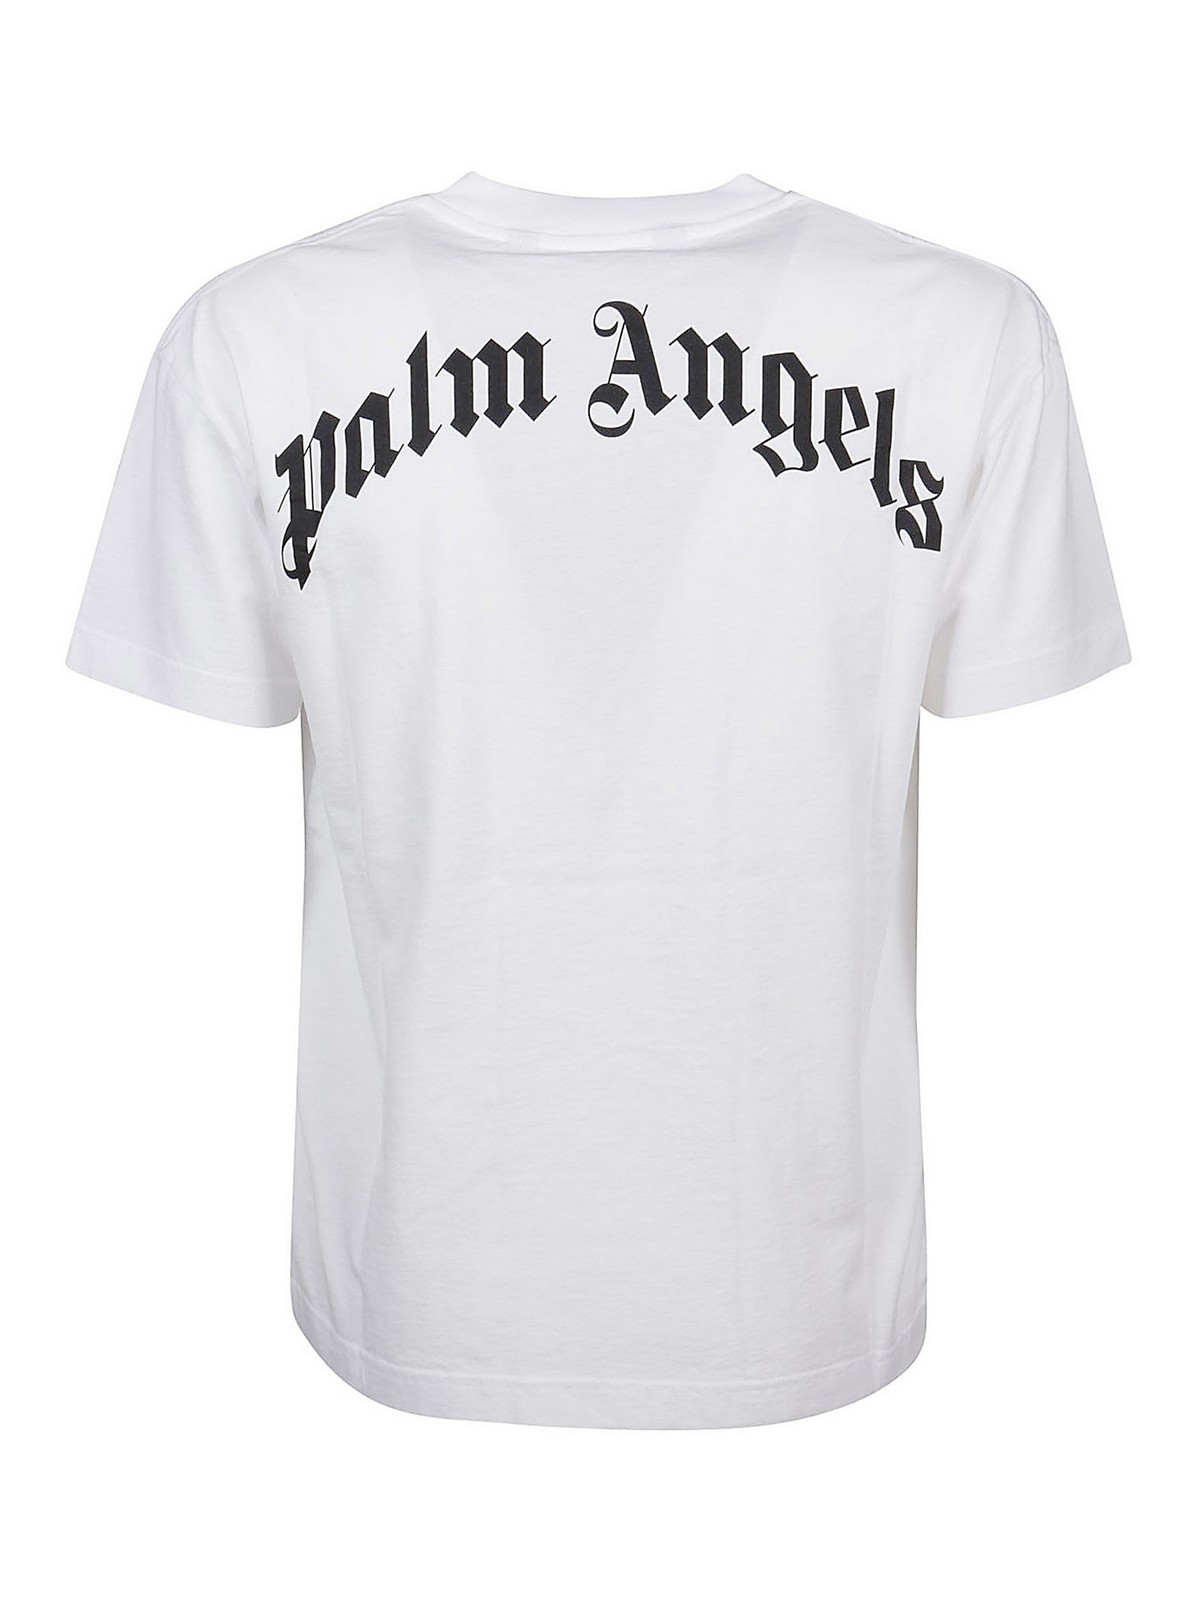 palm angels shirt